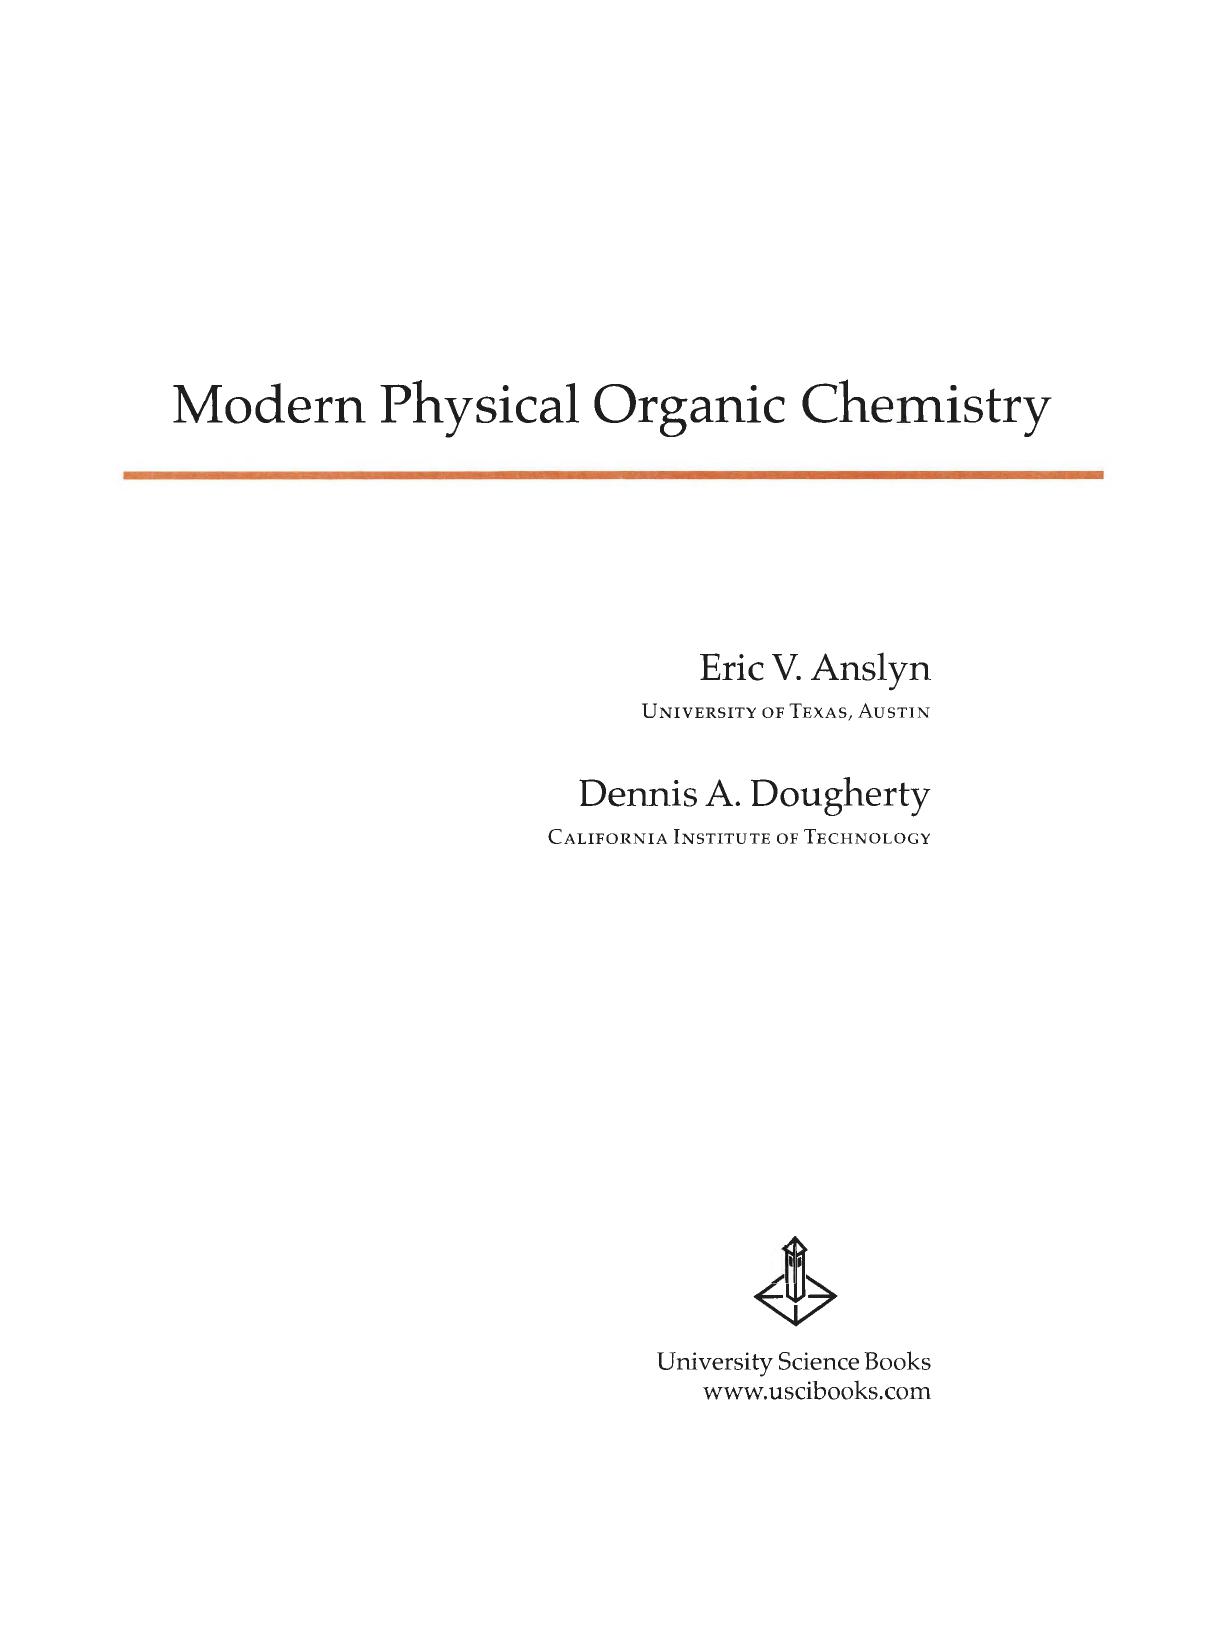 Modern Physical Organic Chemistry 2006